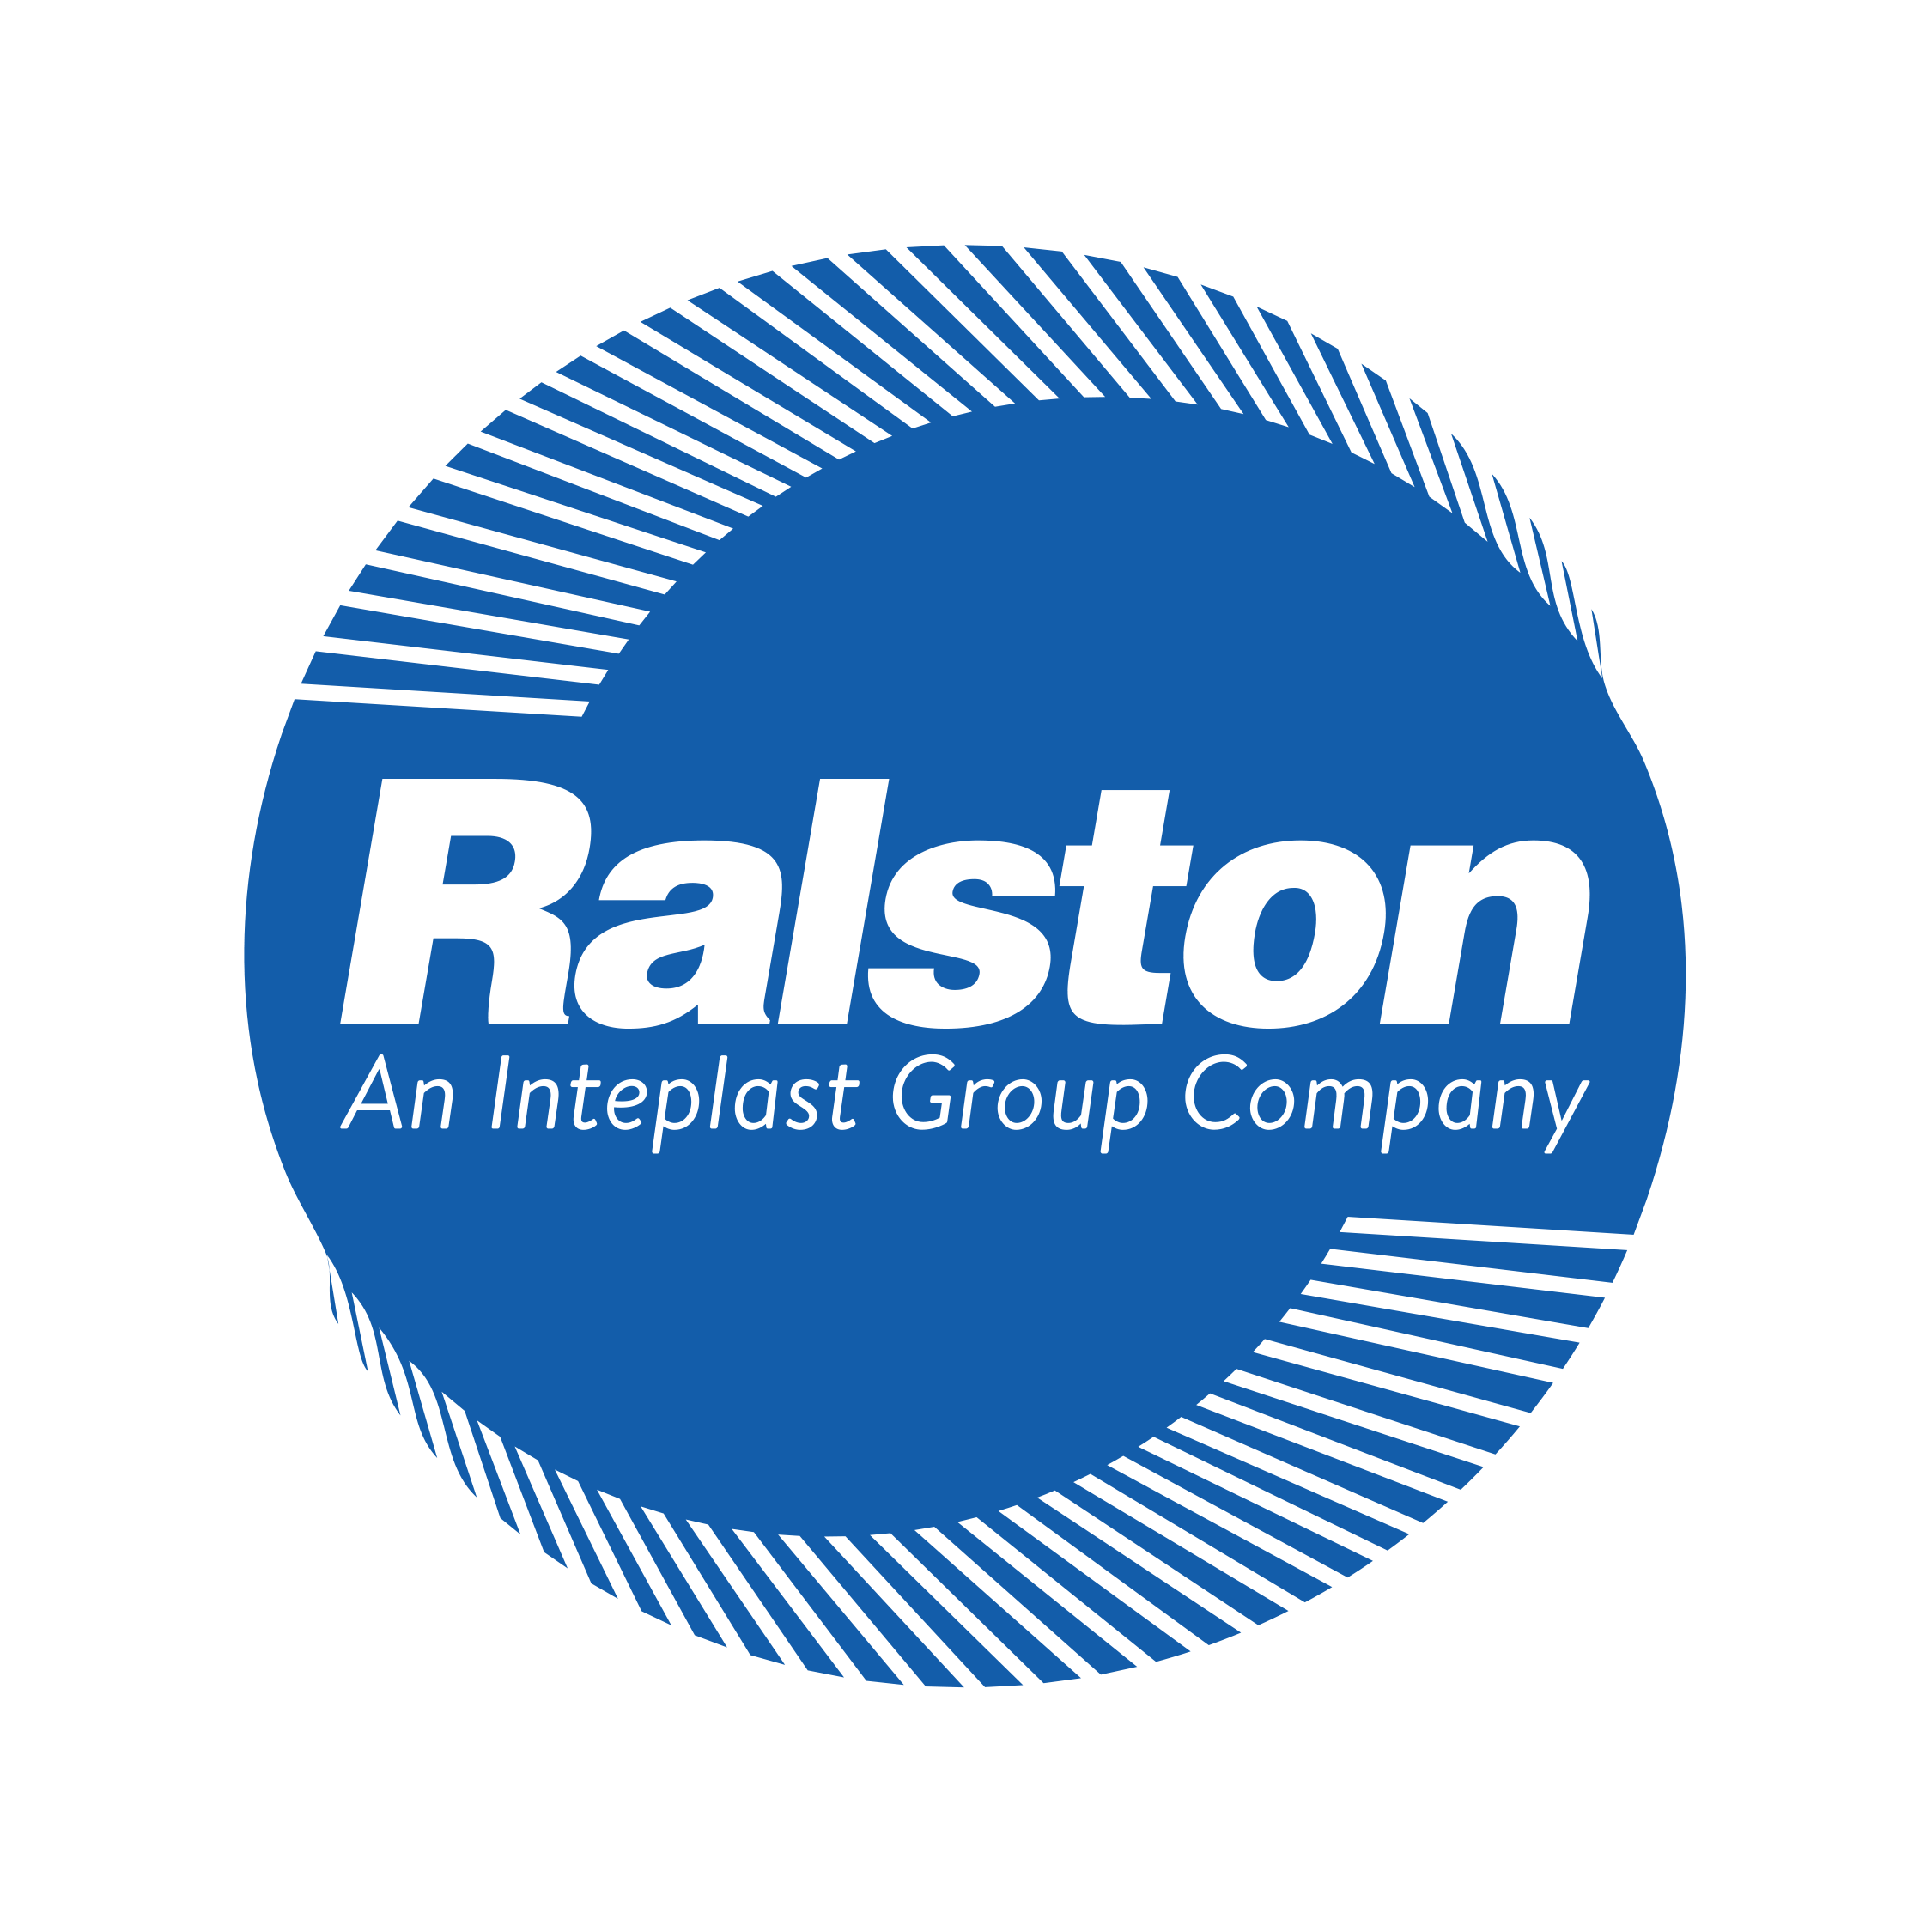 Ralston